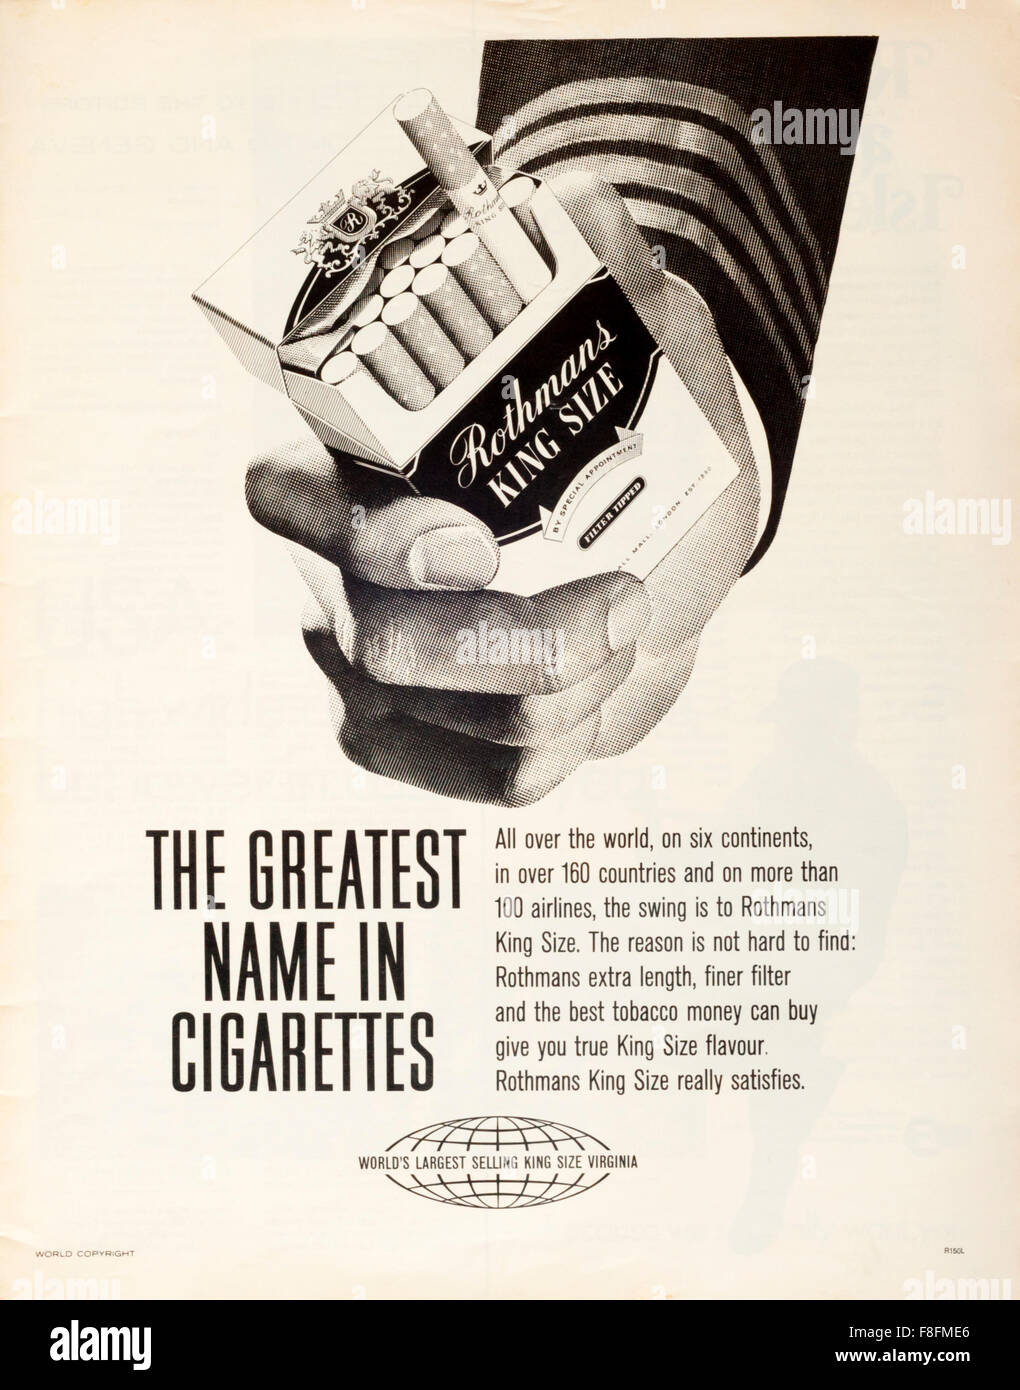 1960s magazine advertisement advertising Rothmans King Size cigarettes ...